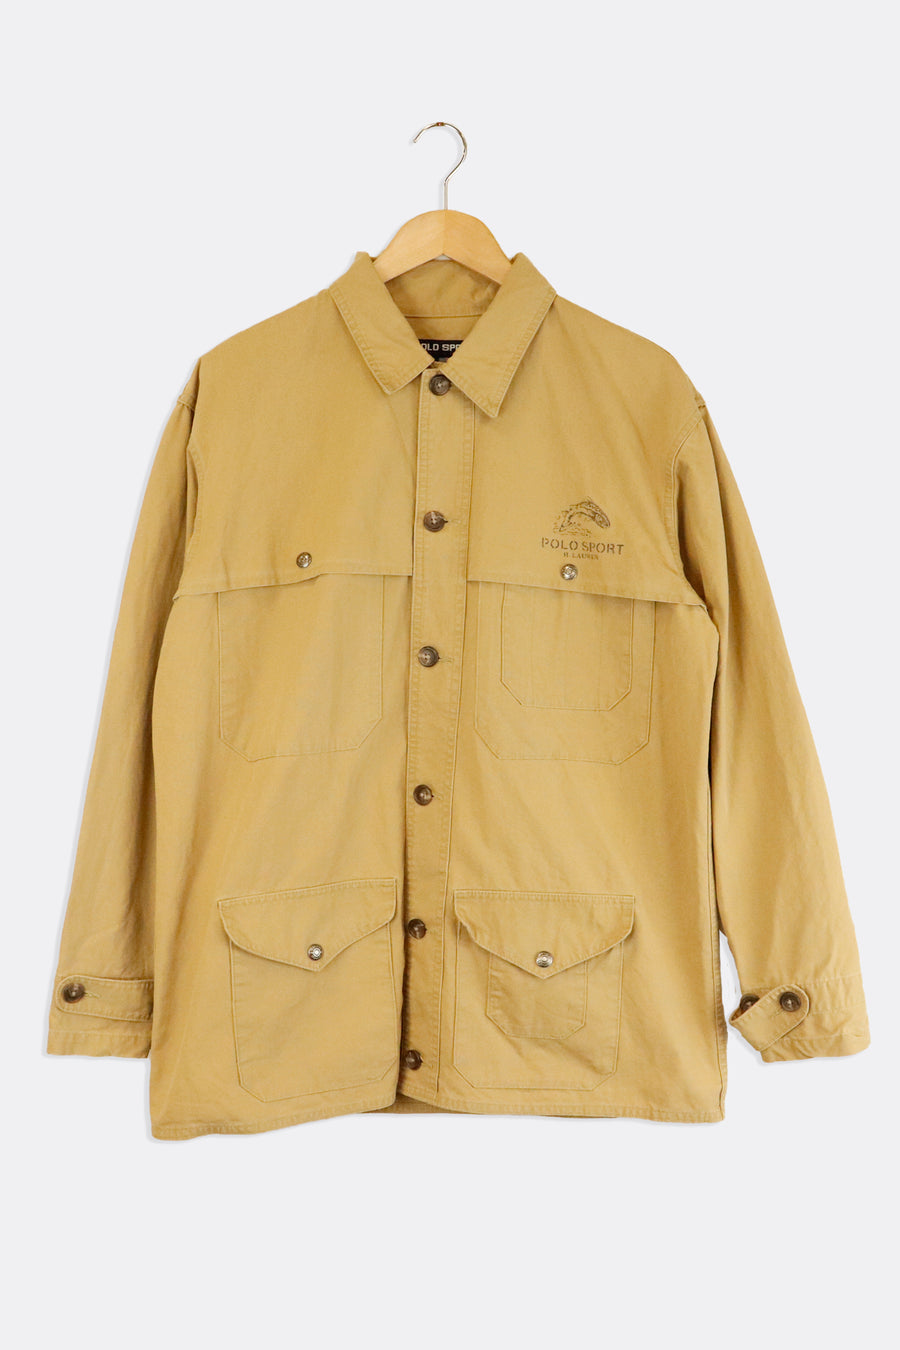 Vintage Polosport Ralph Lauren Jacket With Buttons Sz S